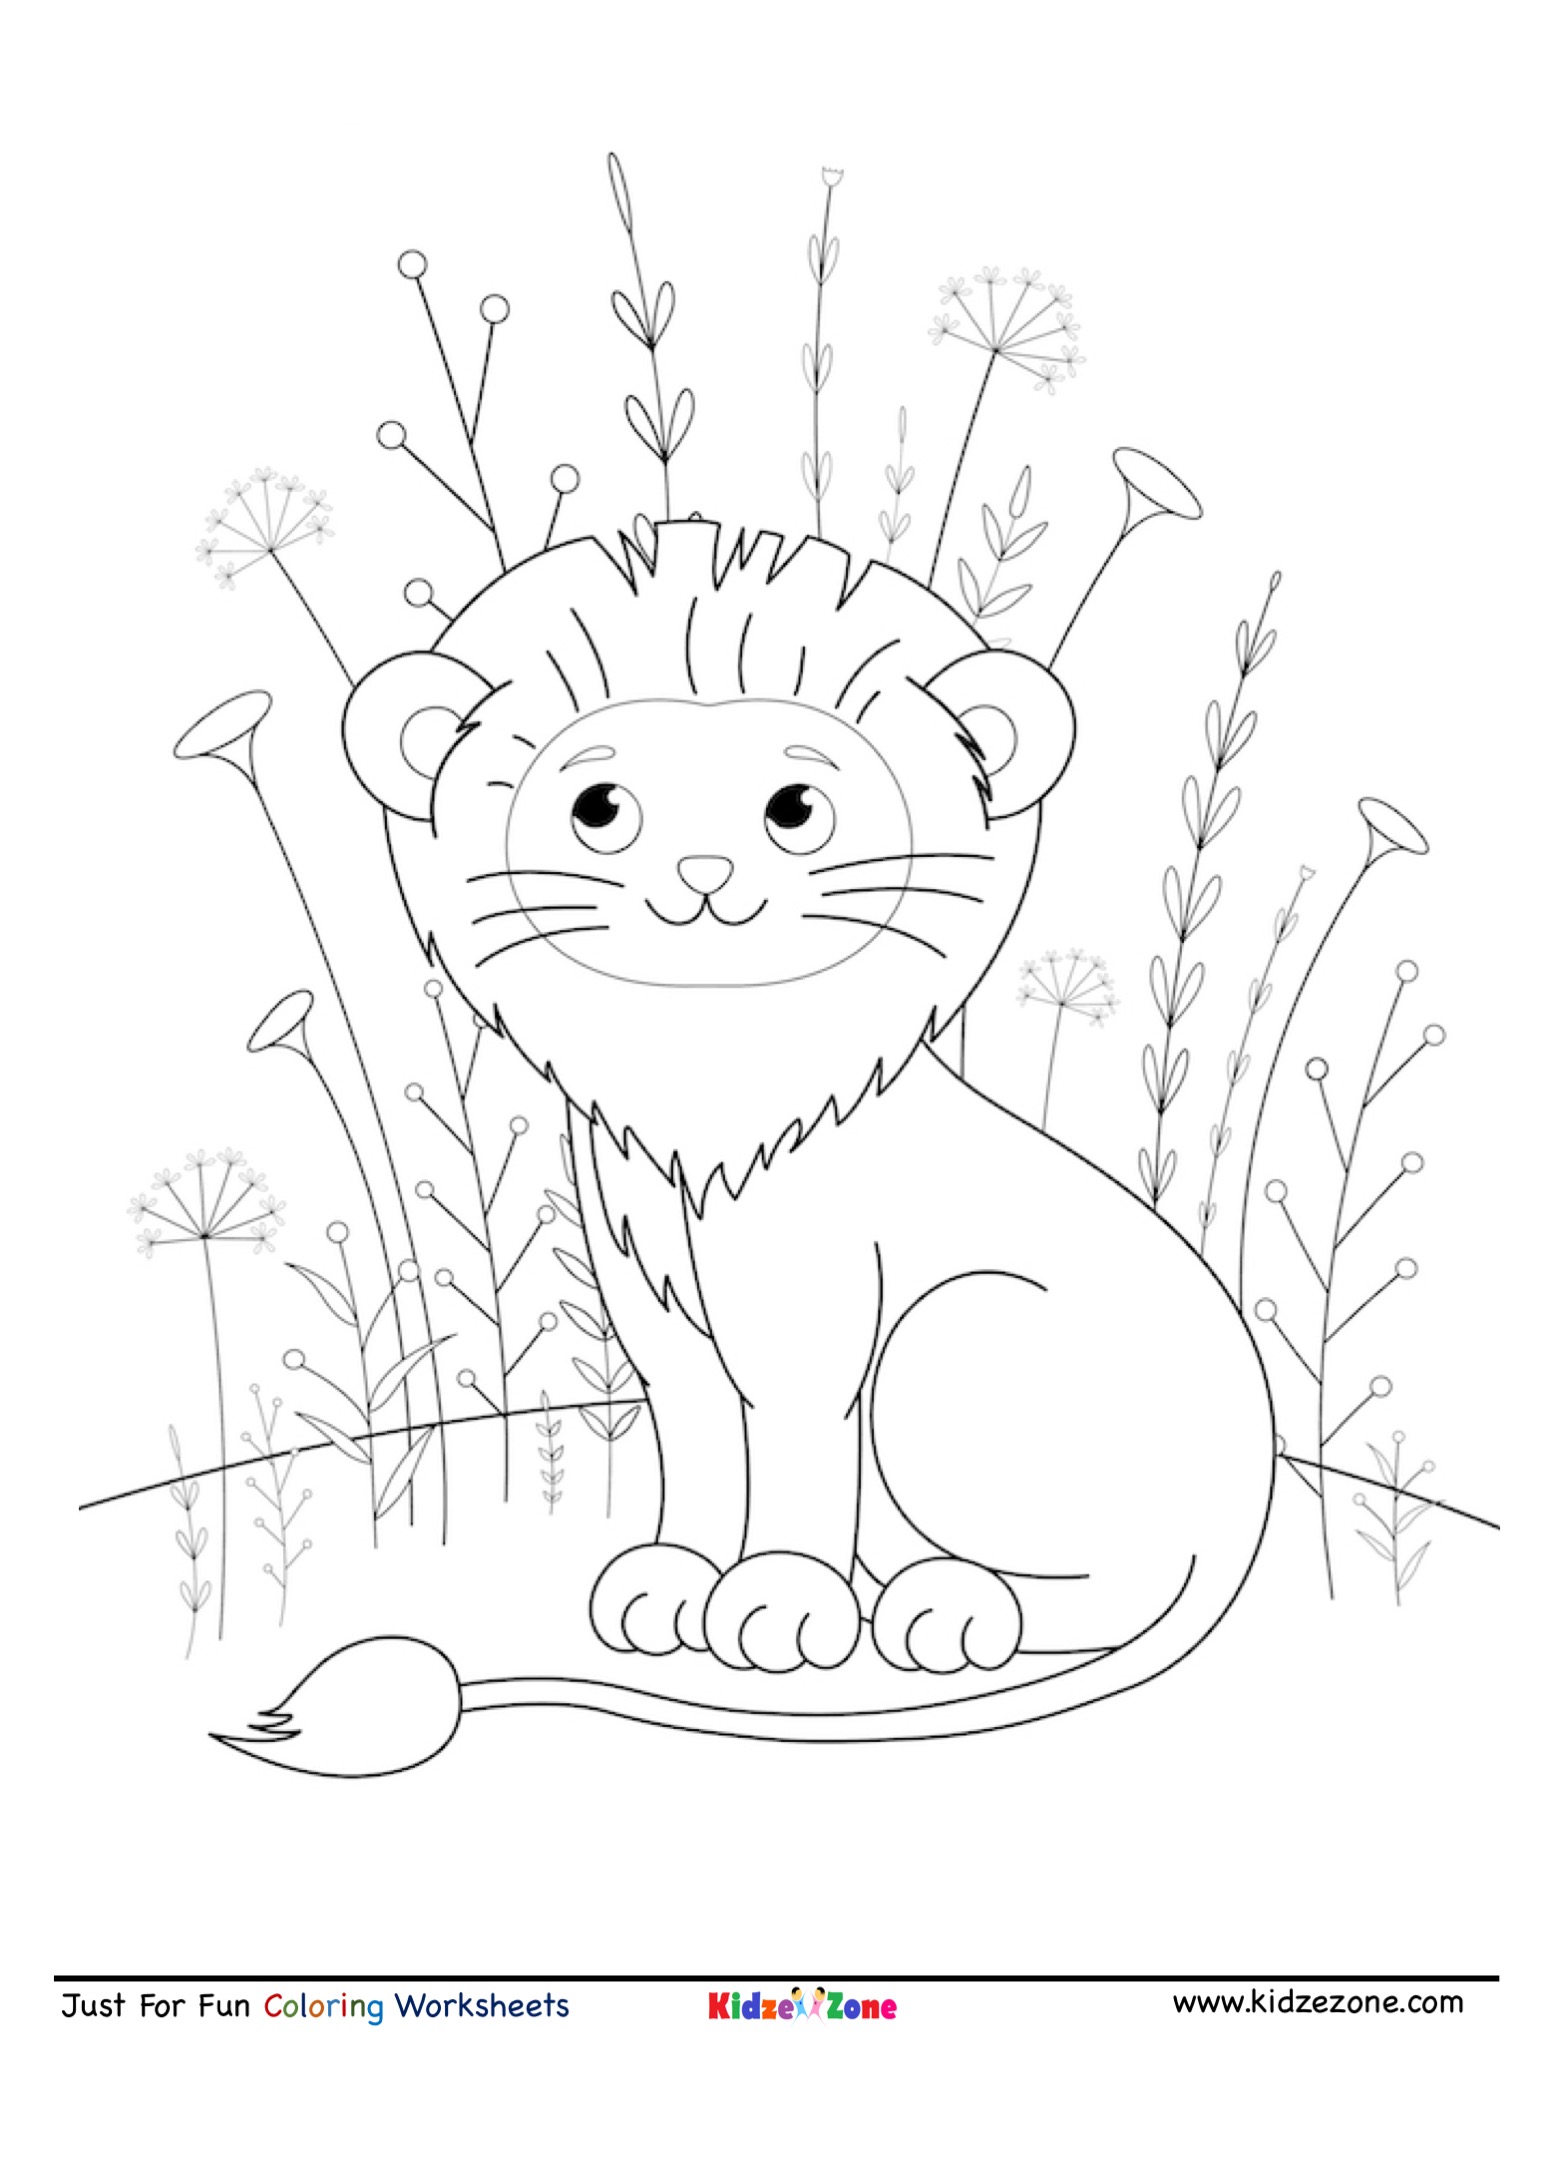 Download Cute Smiling Lion coloring Page - KidzeZone